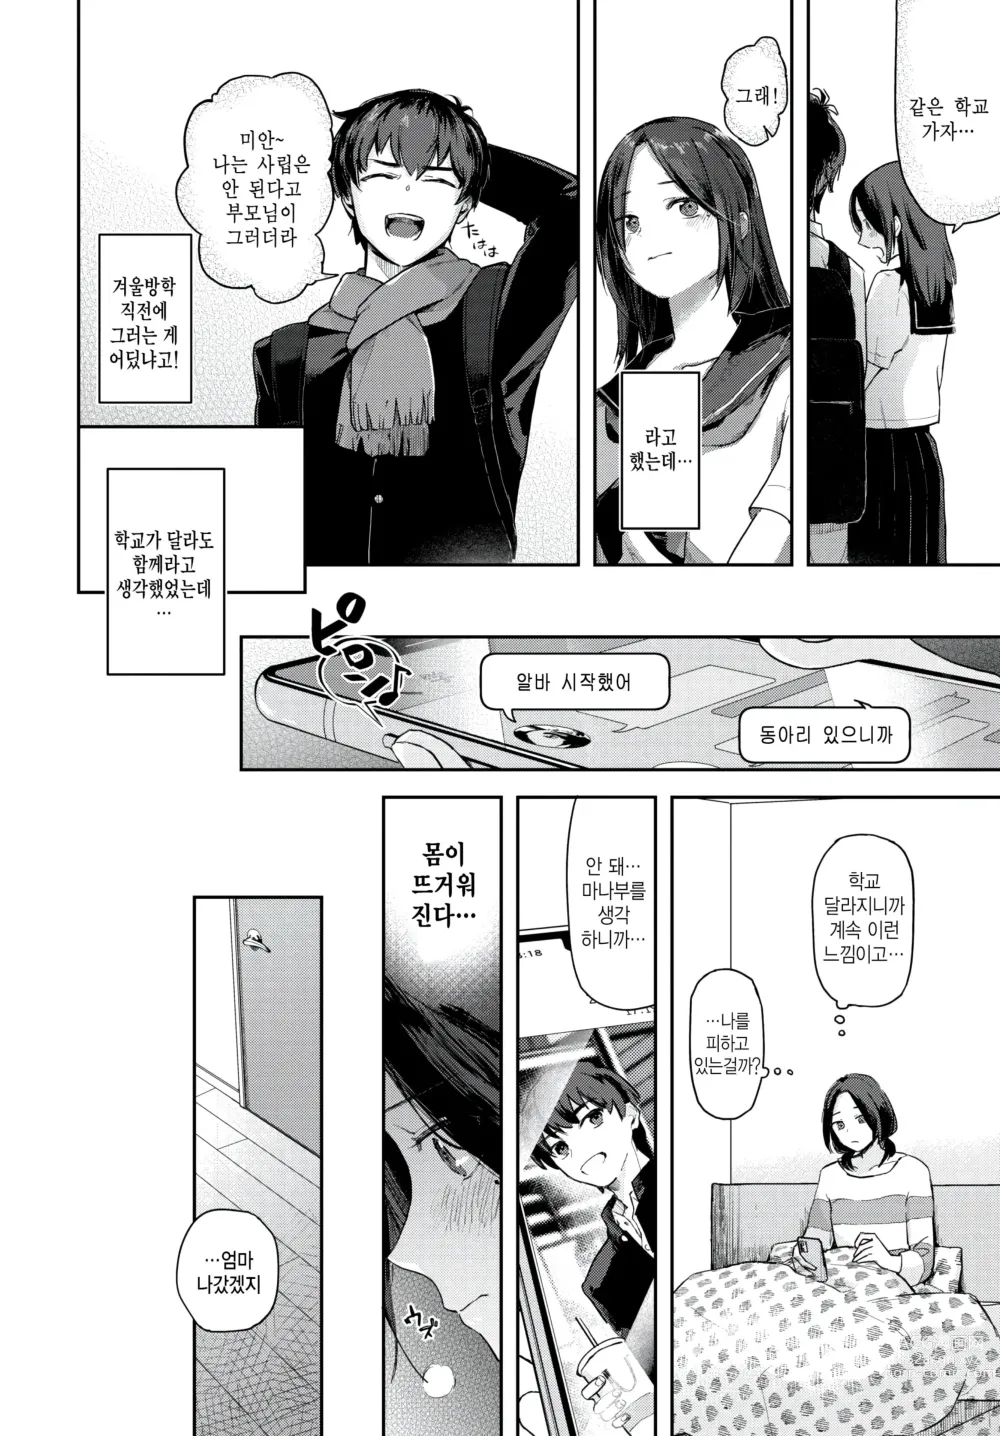 Page 2 of manga Surechigai Souai